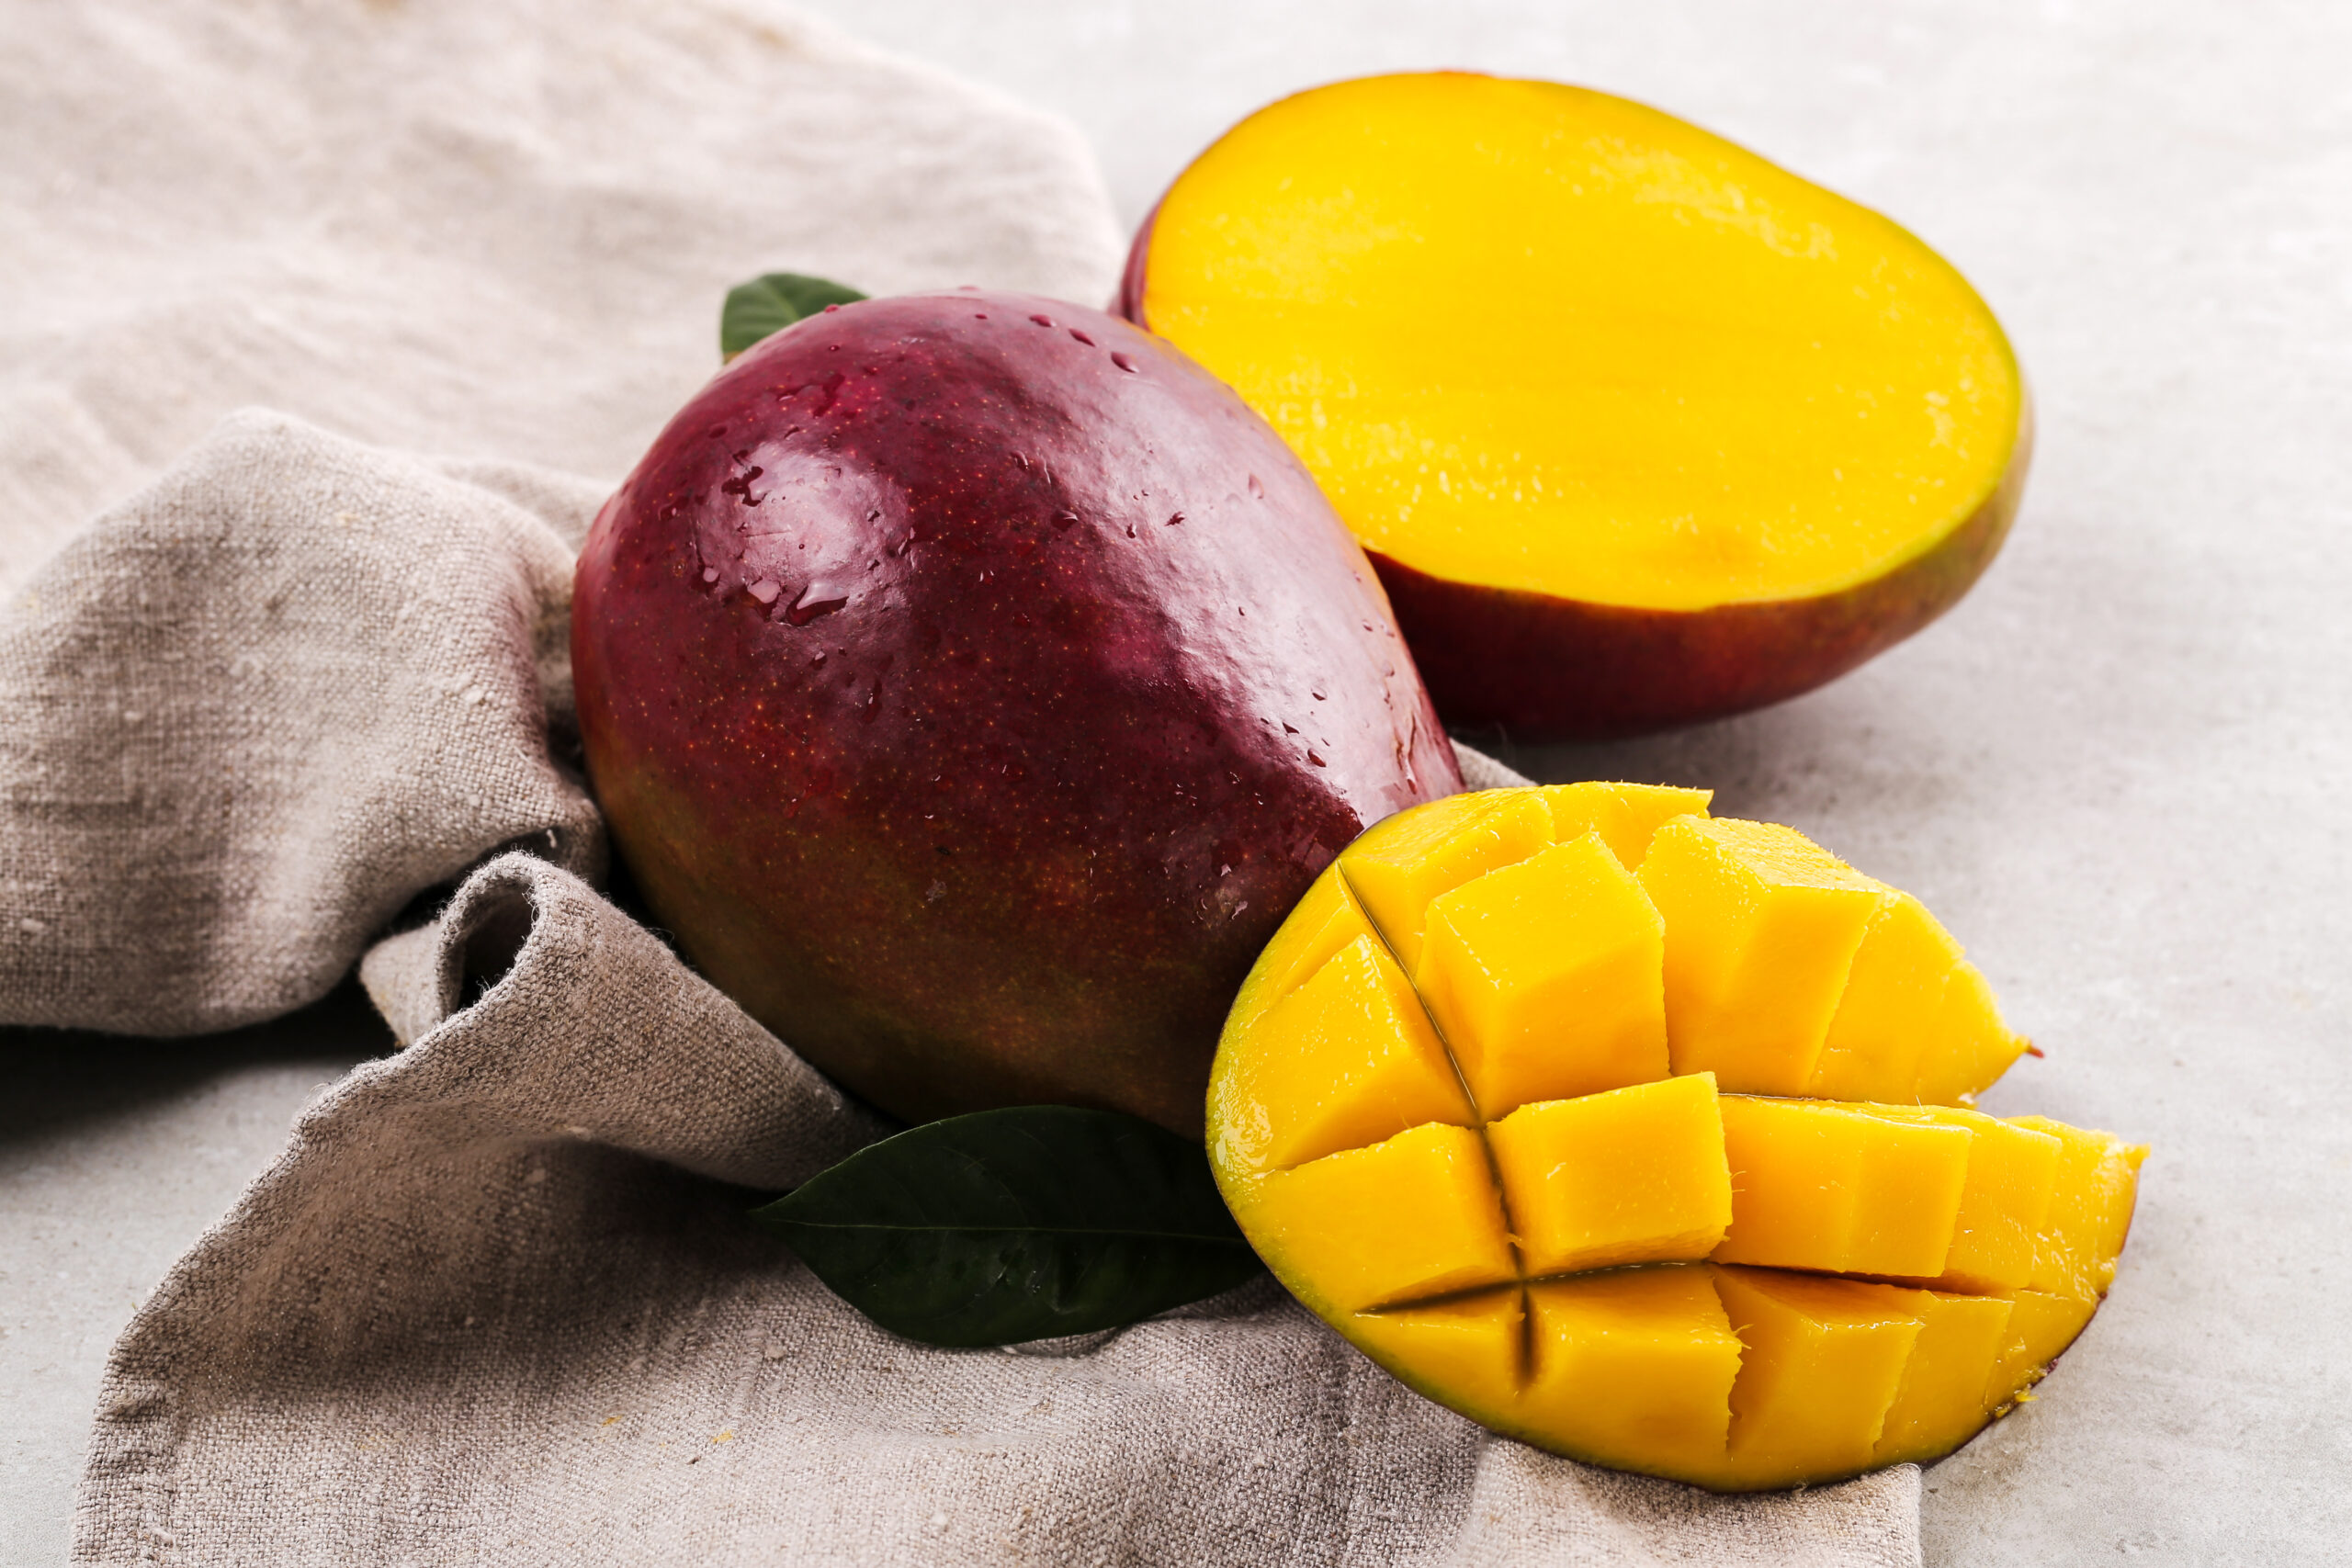 recetas de postres con mango